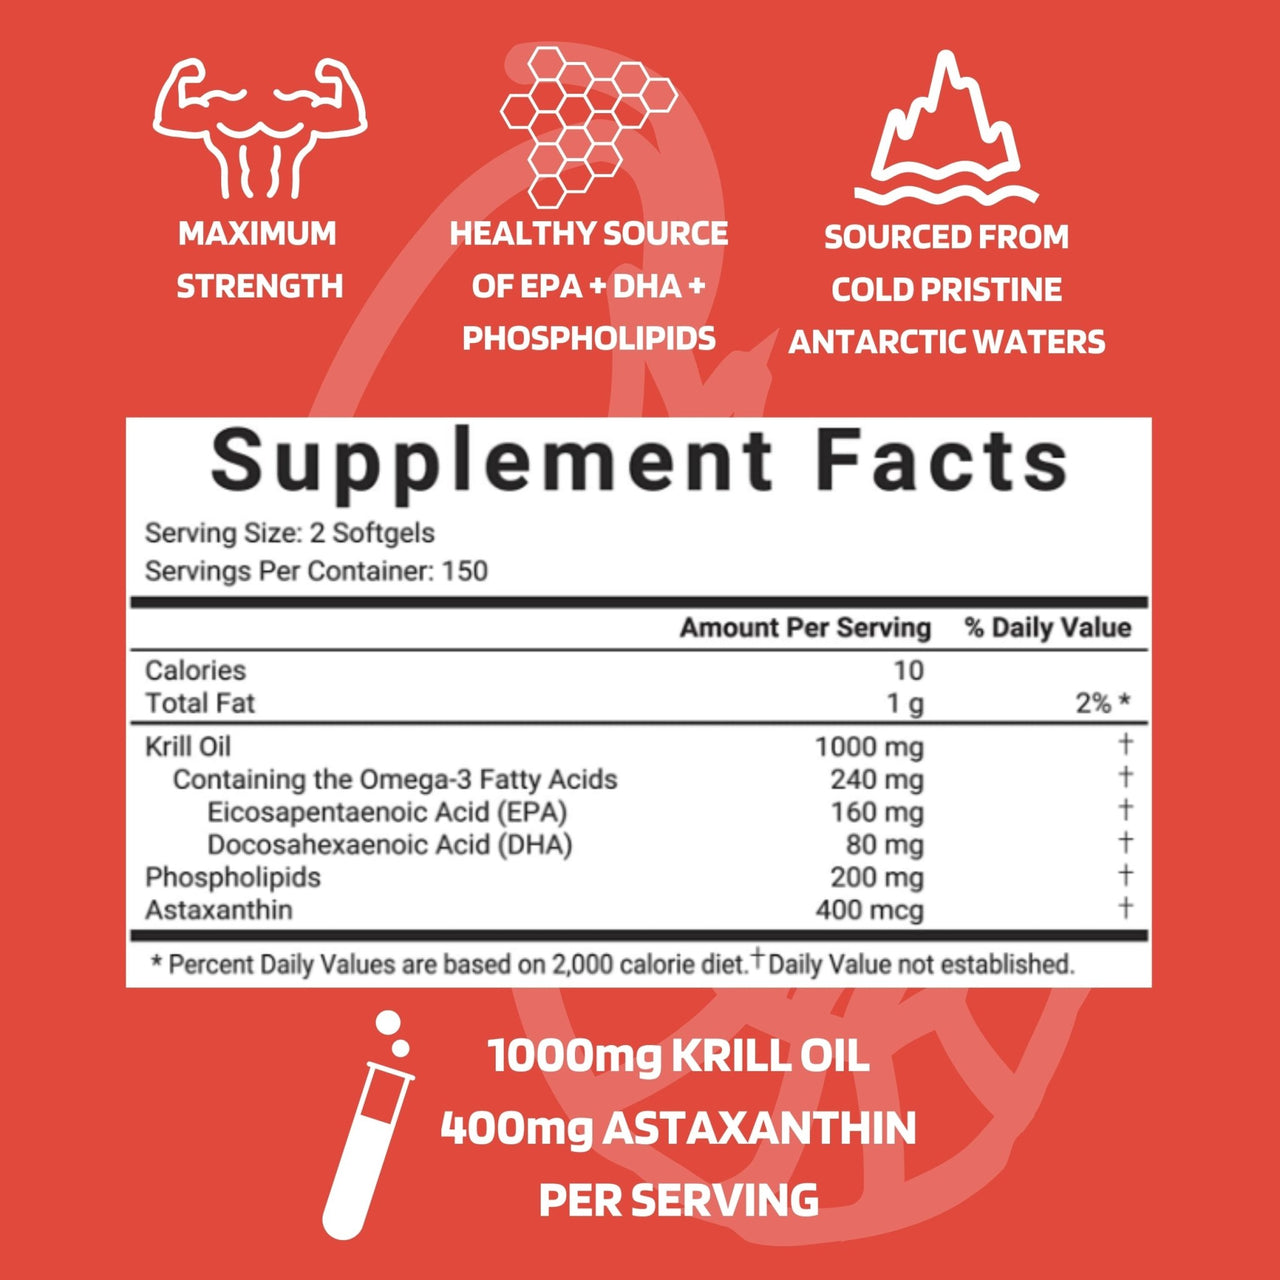 Antarctic Krill Oil Supplement, 1000mg Per Serving, 300 Soft-Gels - Probase Nutrition